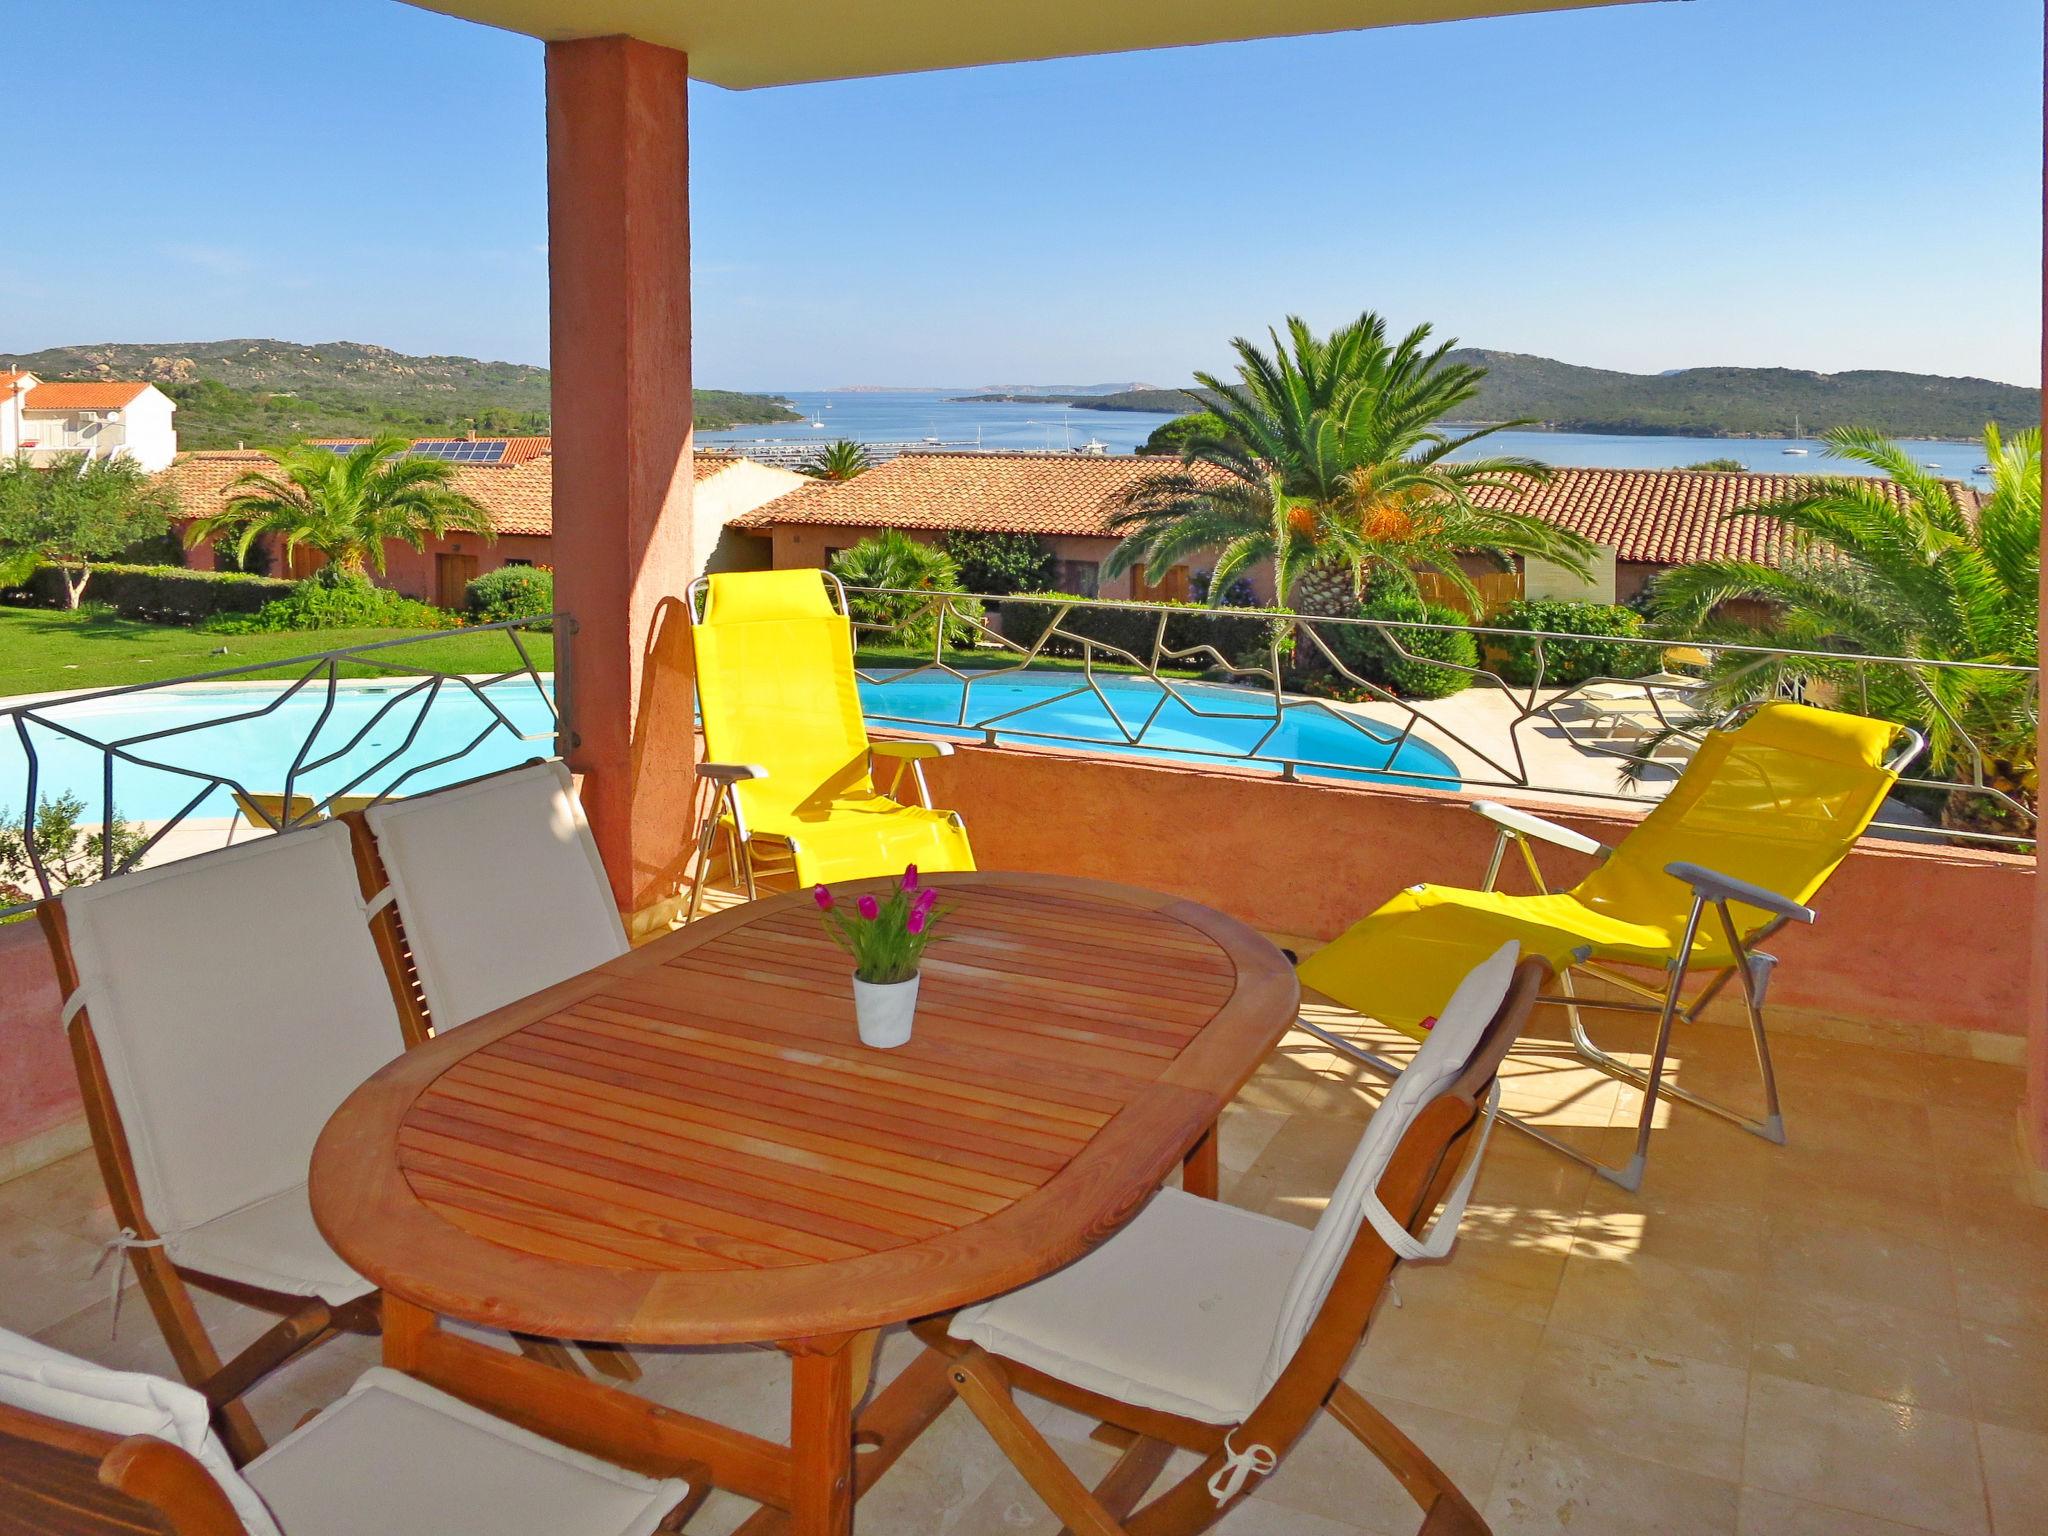 Photo 1 - Appartement de 1 chambre à Santa Teresa Gallura avec piscine et vues à la mer